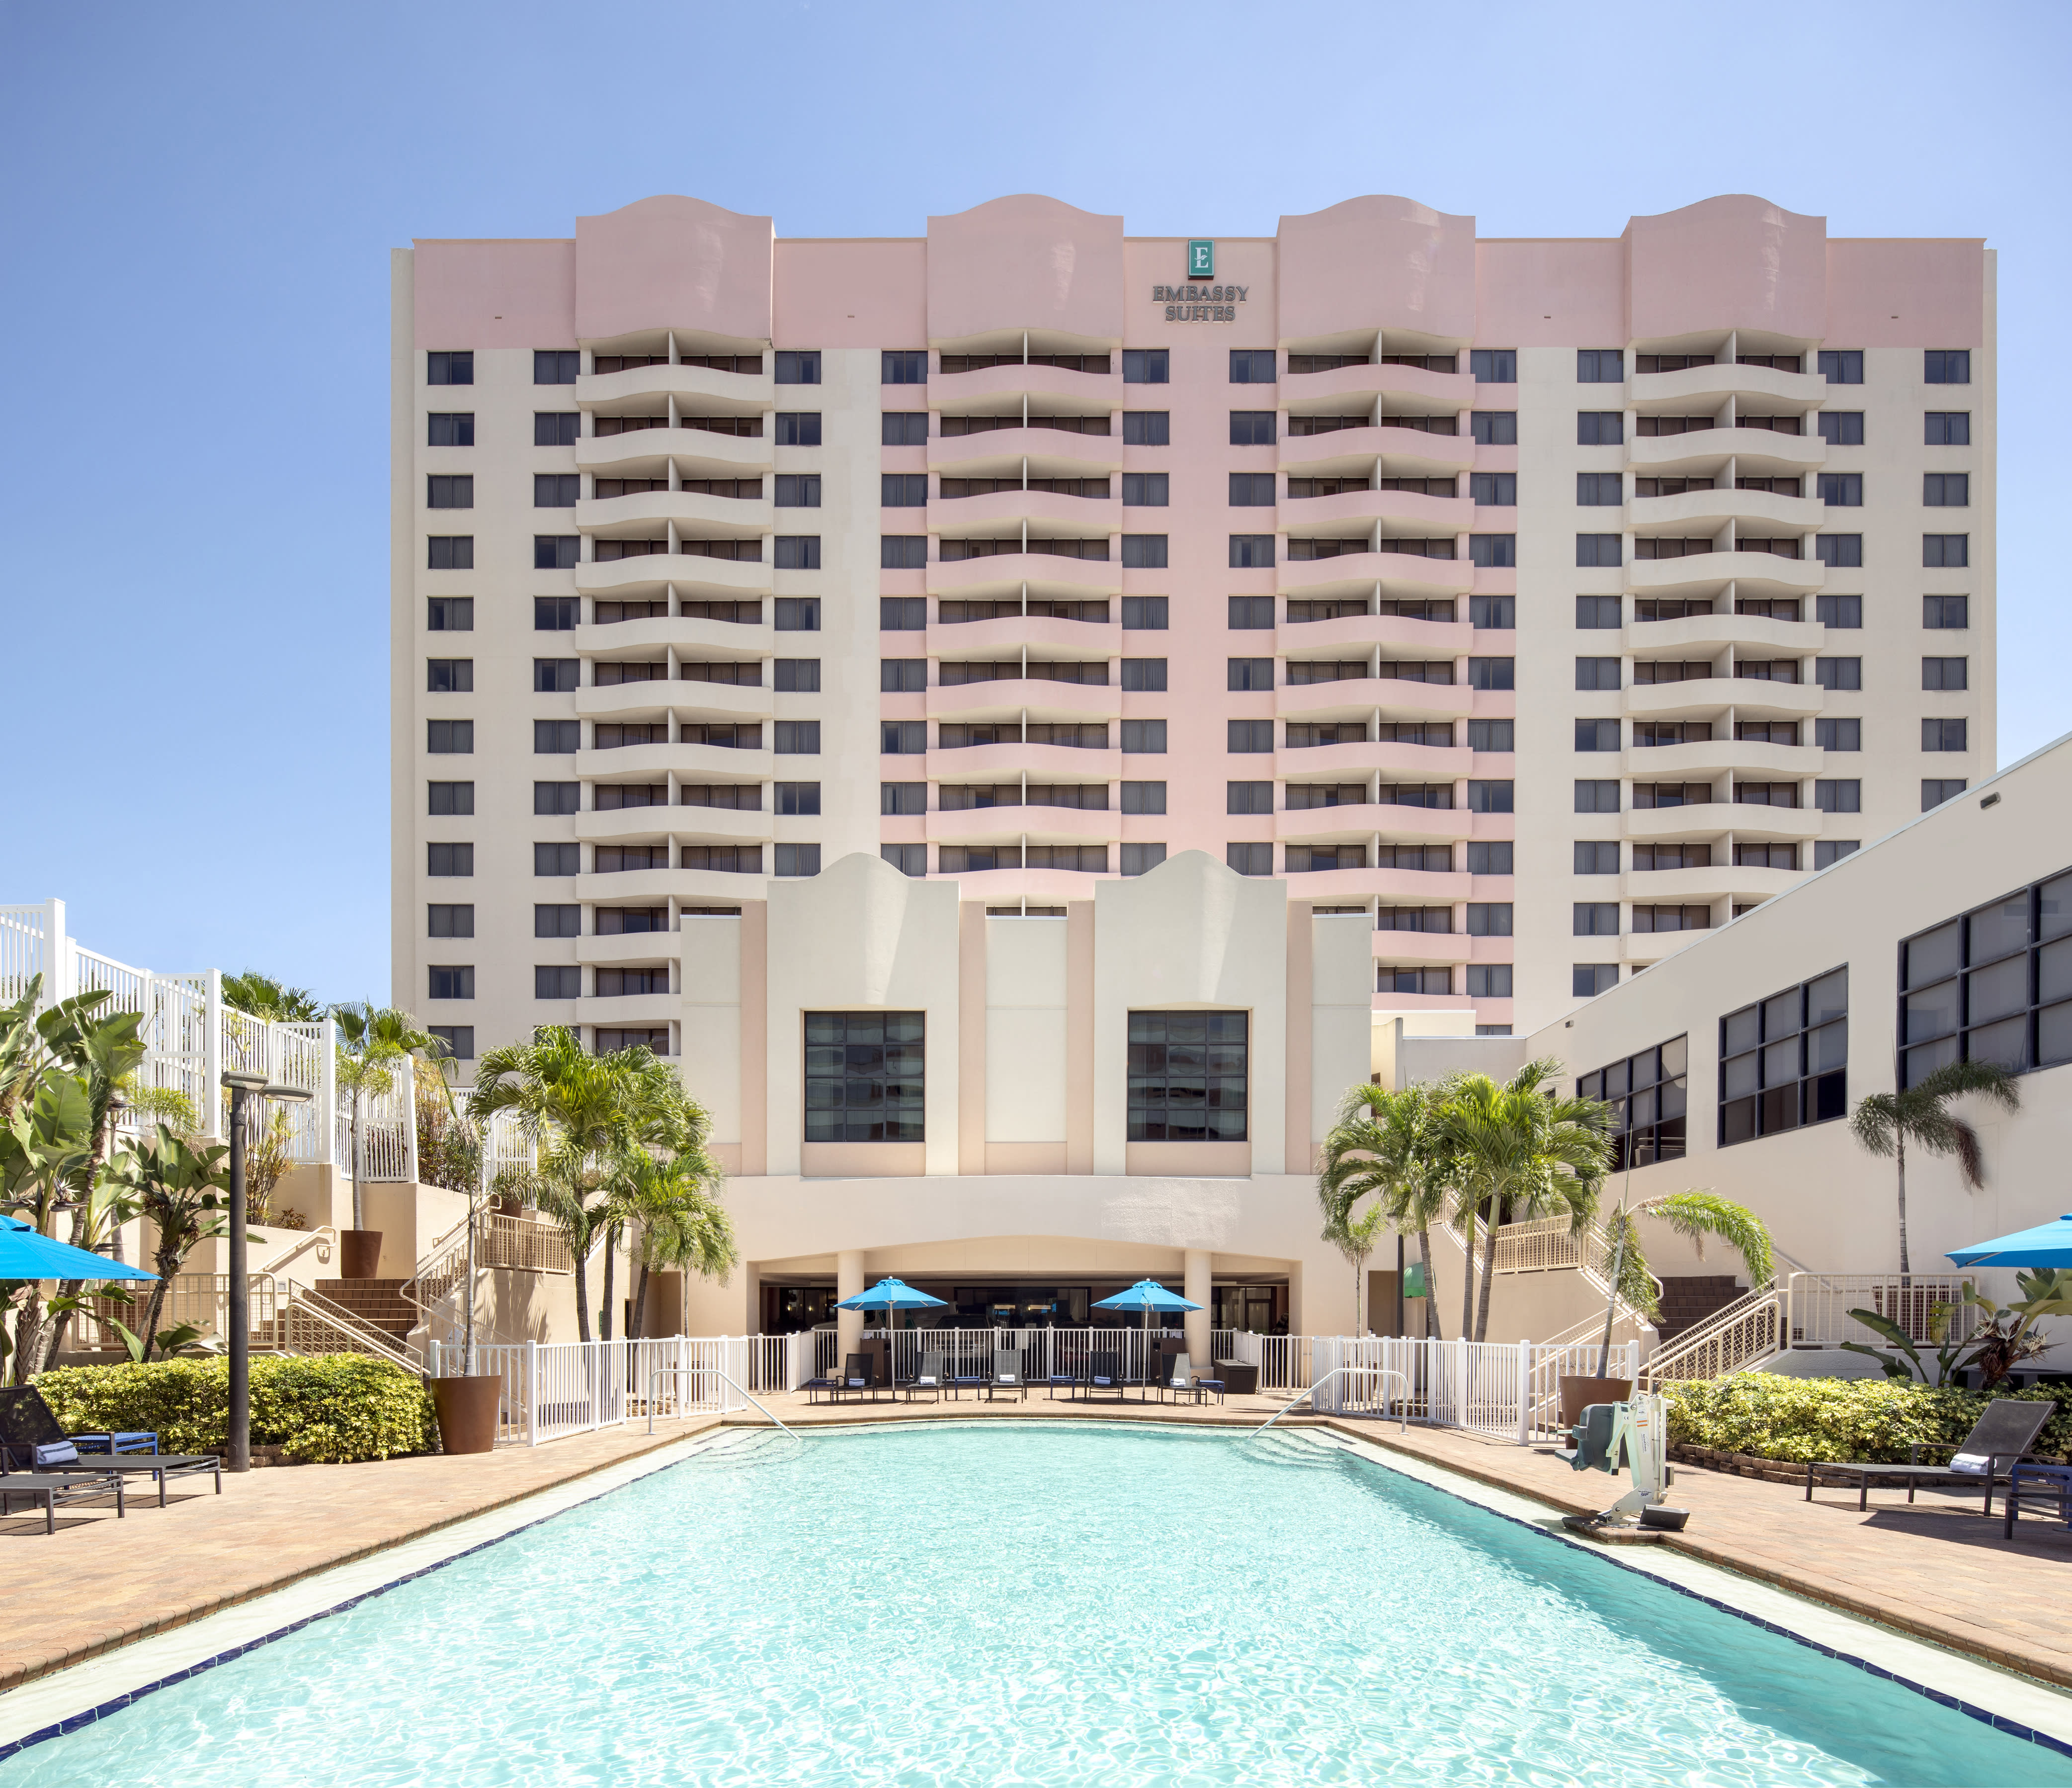 Embassy Suites by Hilton Phoenix Biltmore: Pool & Spa Day Pass Phoenix |  ResortPass